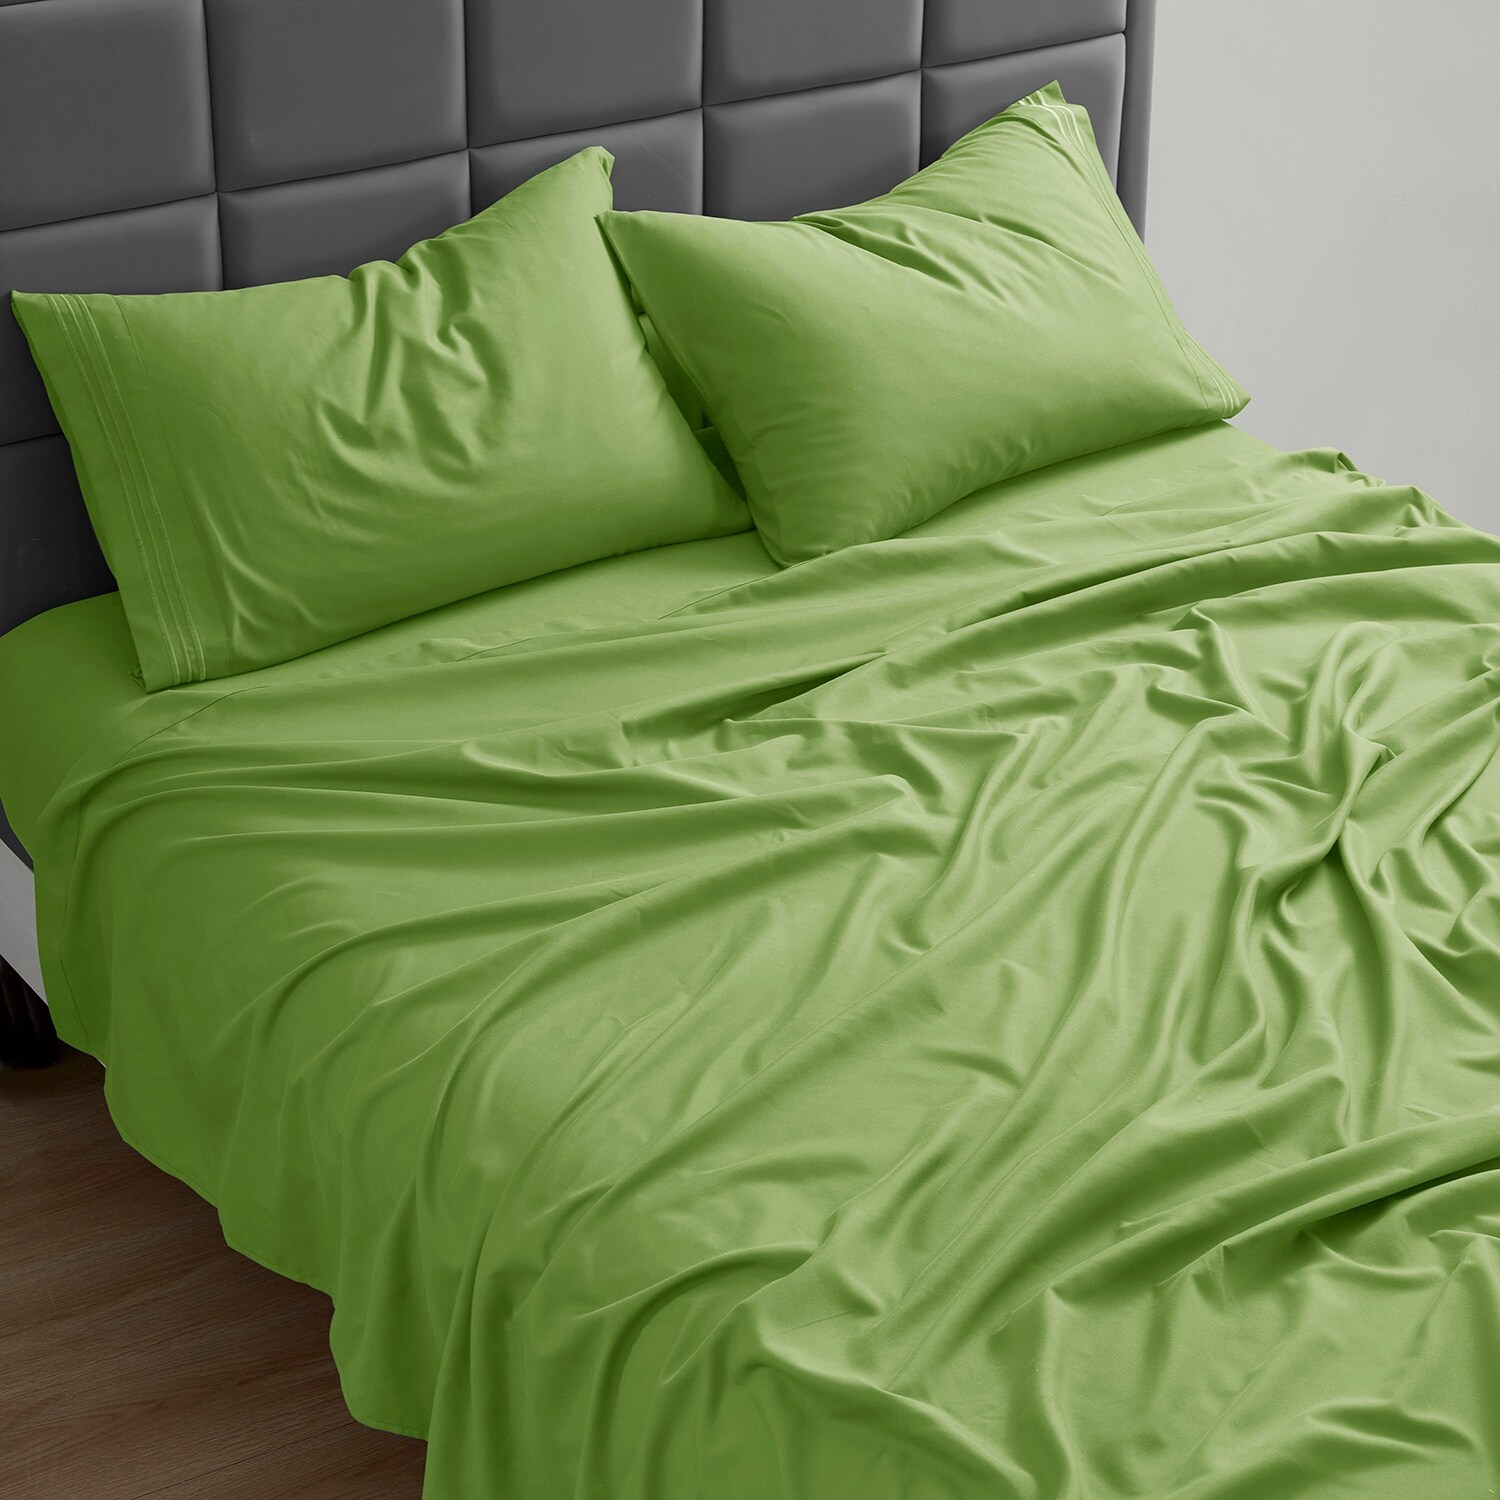 https://ak1.ostkcdn.com/images/products/is/images/direct/2834dcee7171e13ffc4c37c86dc10cef979a20b2/Clara-Clark-Premium-1800-Series-Ultra-soft-Deep-Pocket-Bed-Sheet-Set.jpg